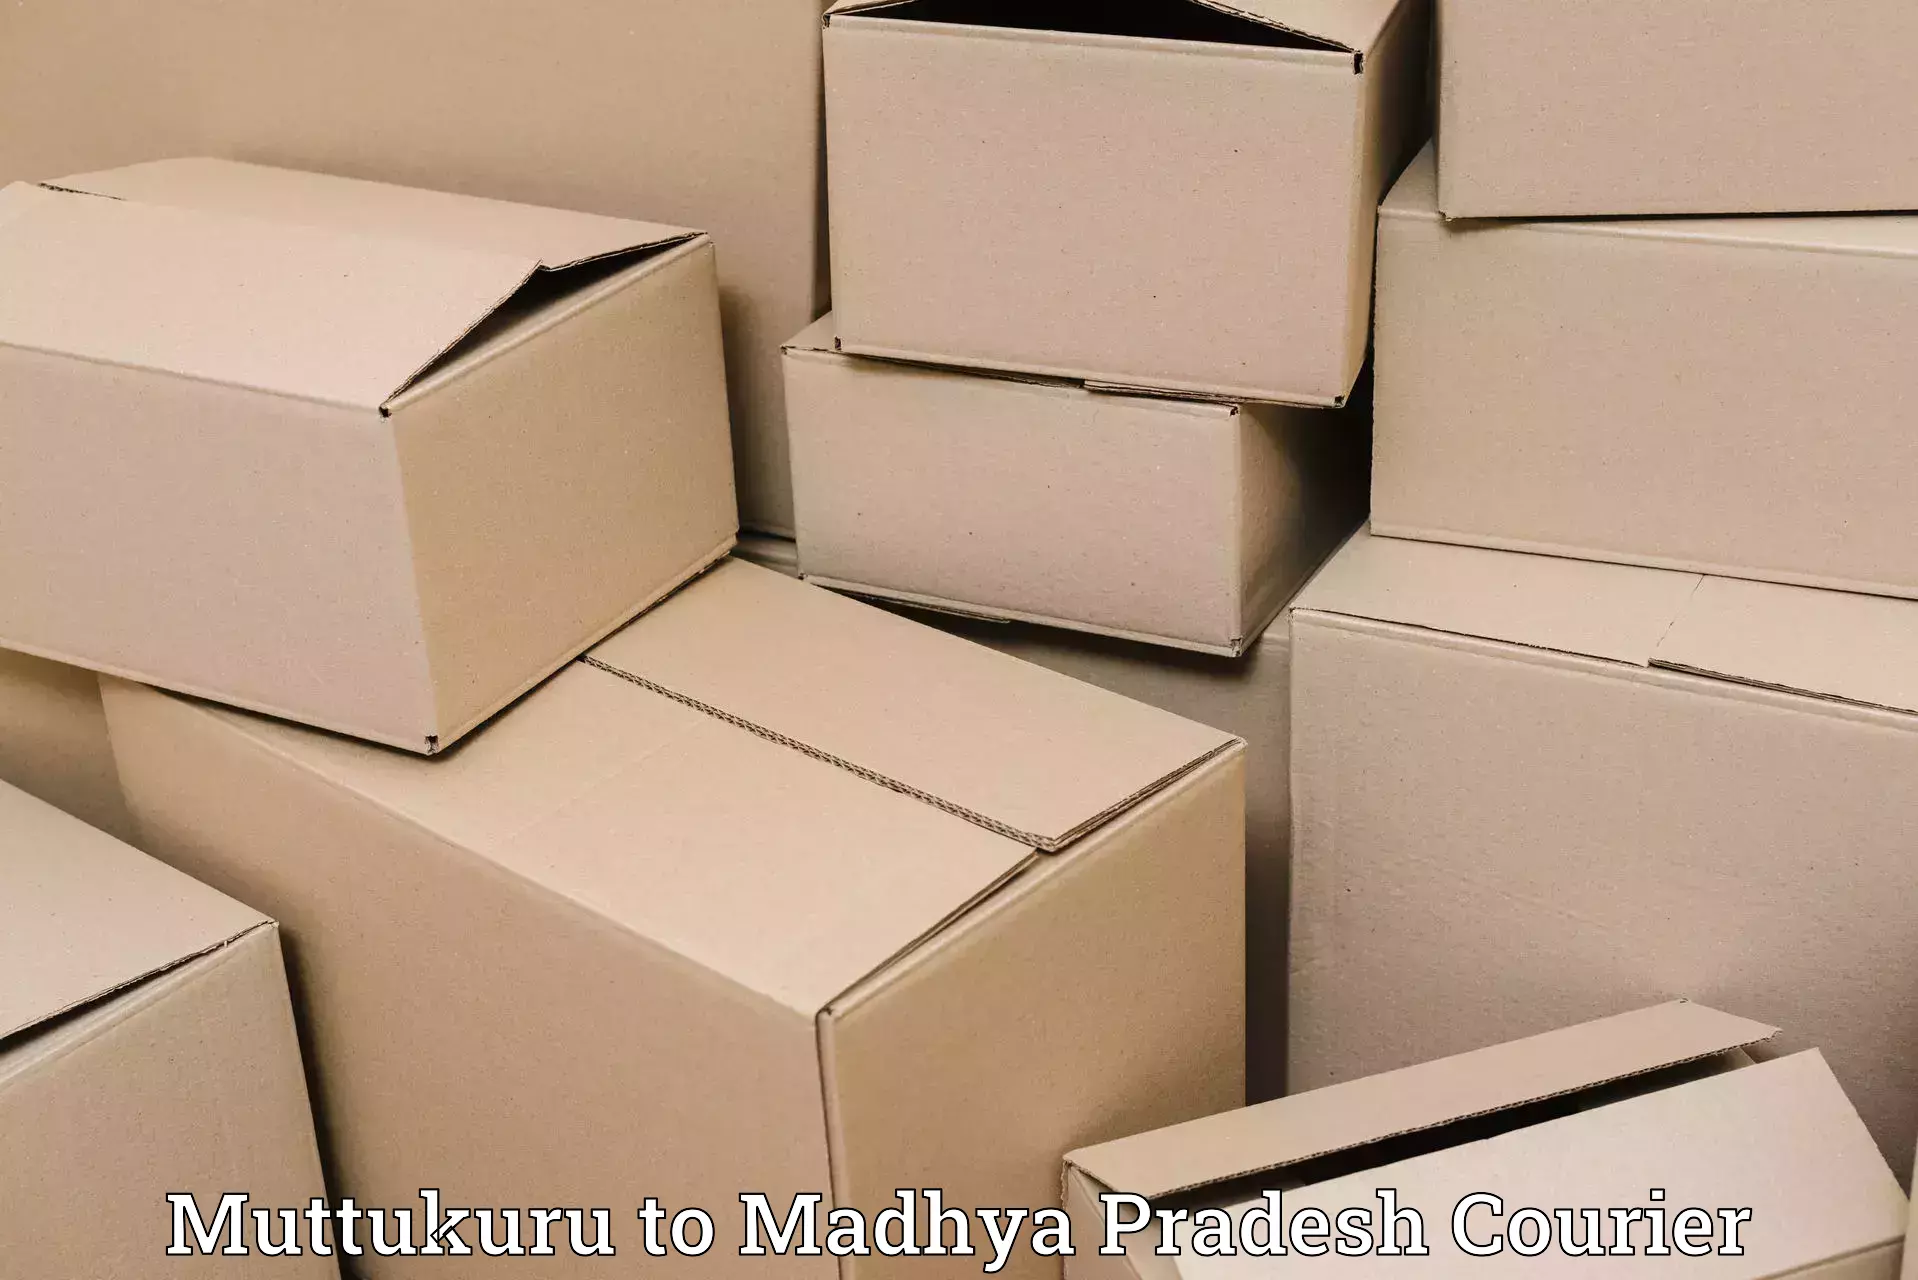 Optimized delivery routes Muttukuru to Maheshwar